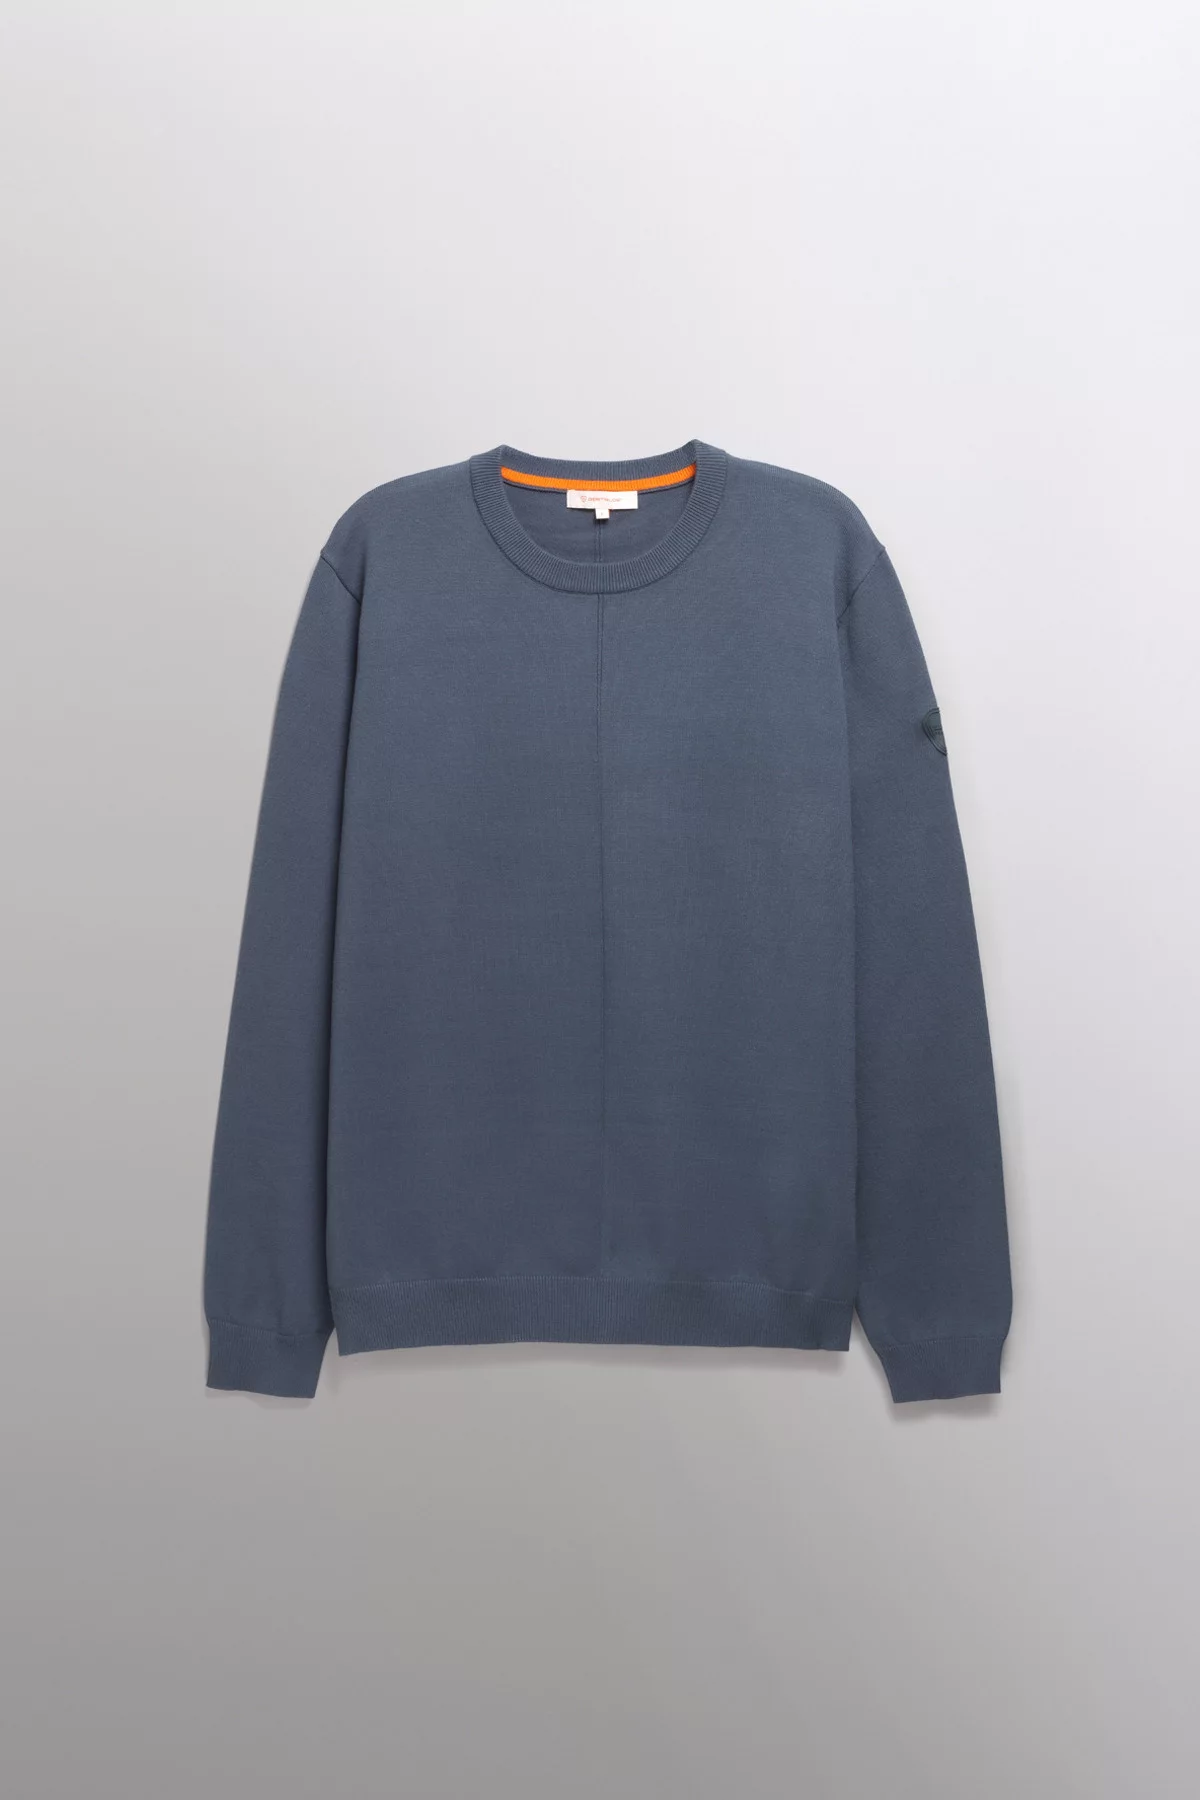 Alois straight-cut knit sweater